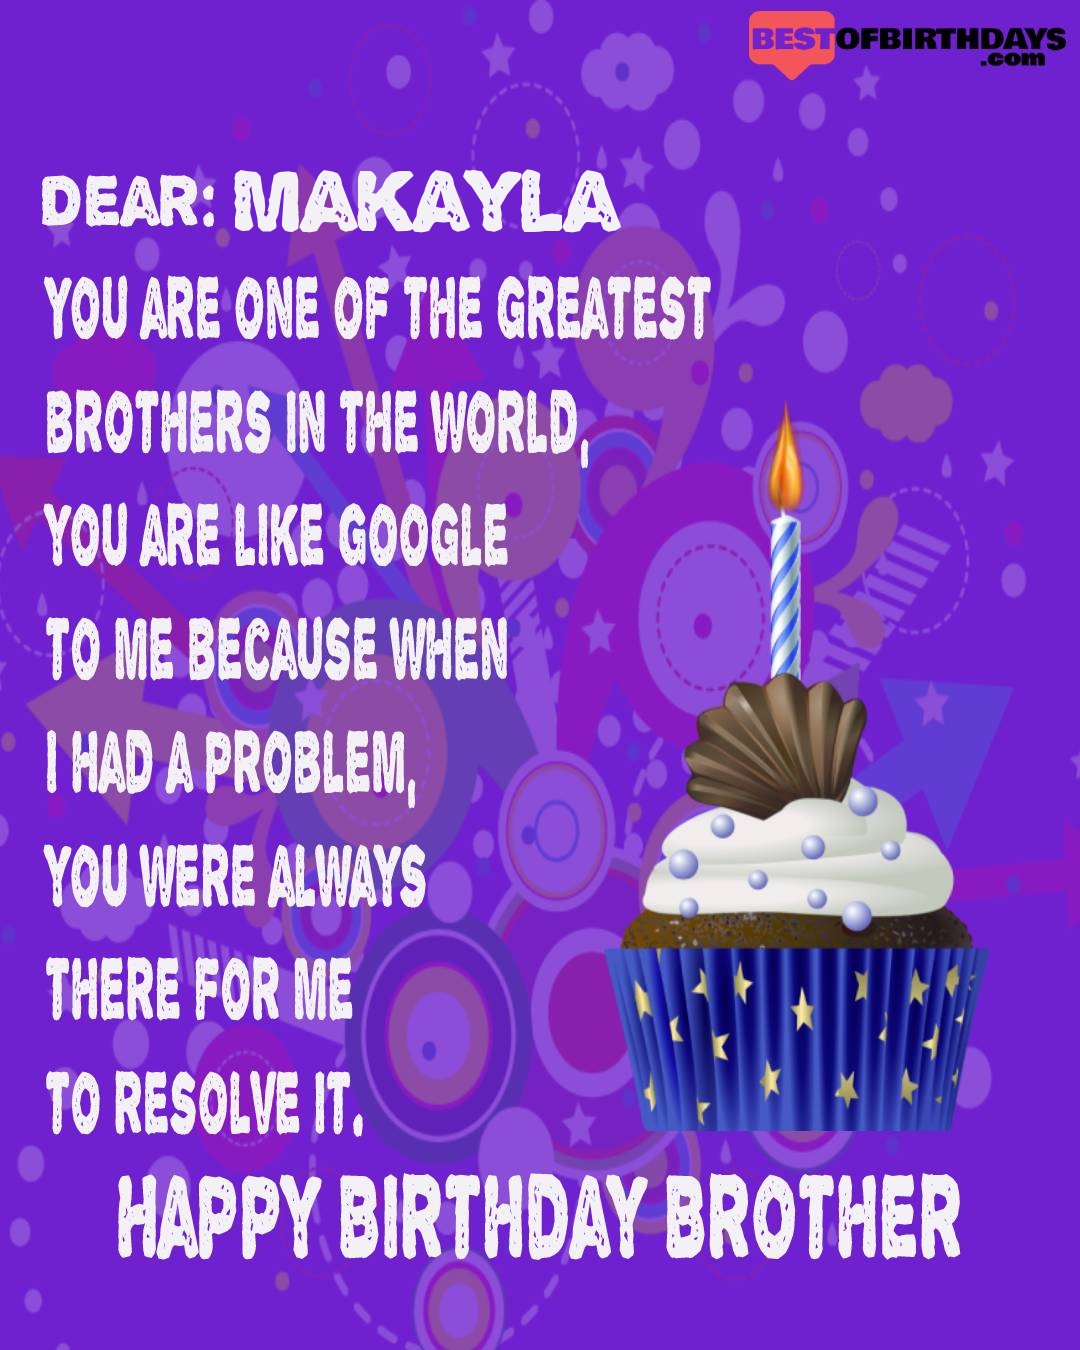 Happy birthday makayla bhai brother bro